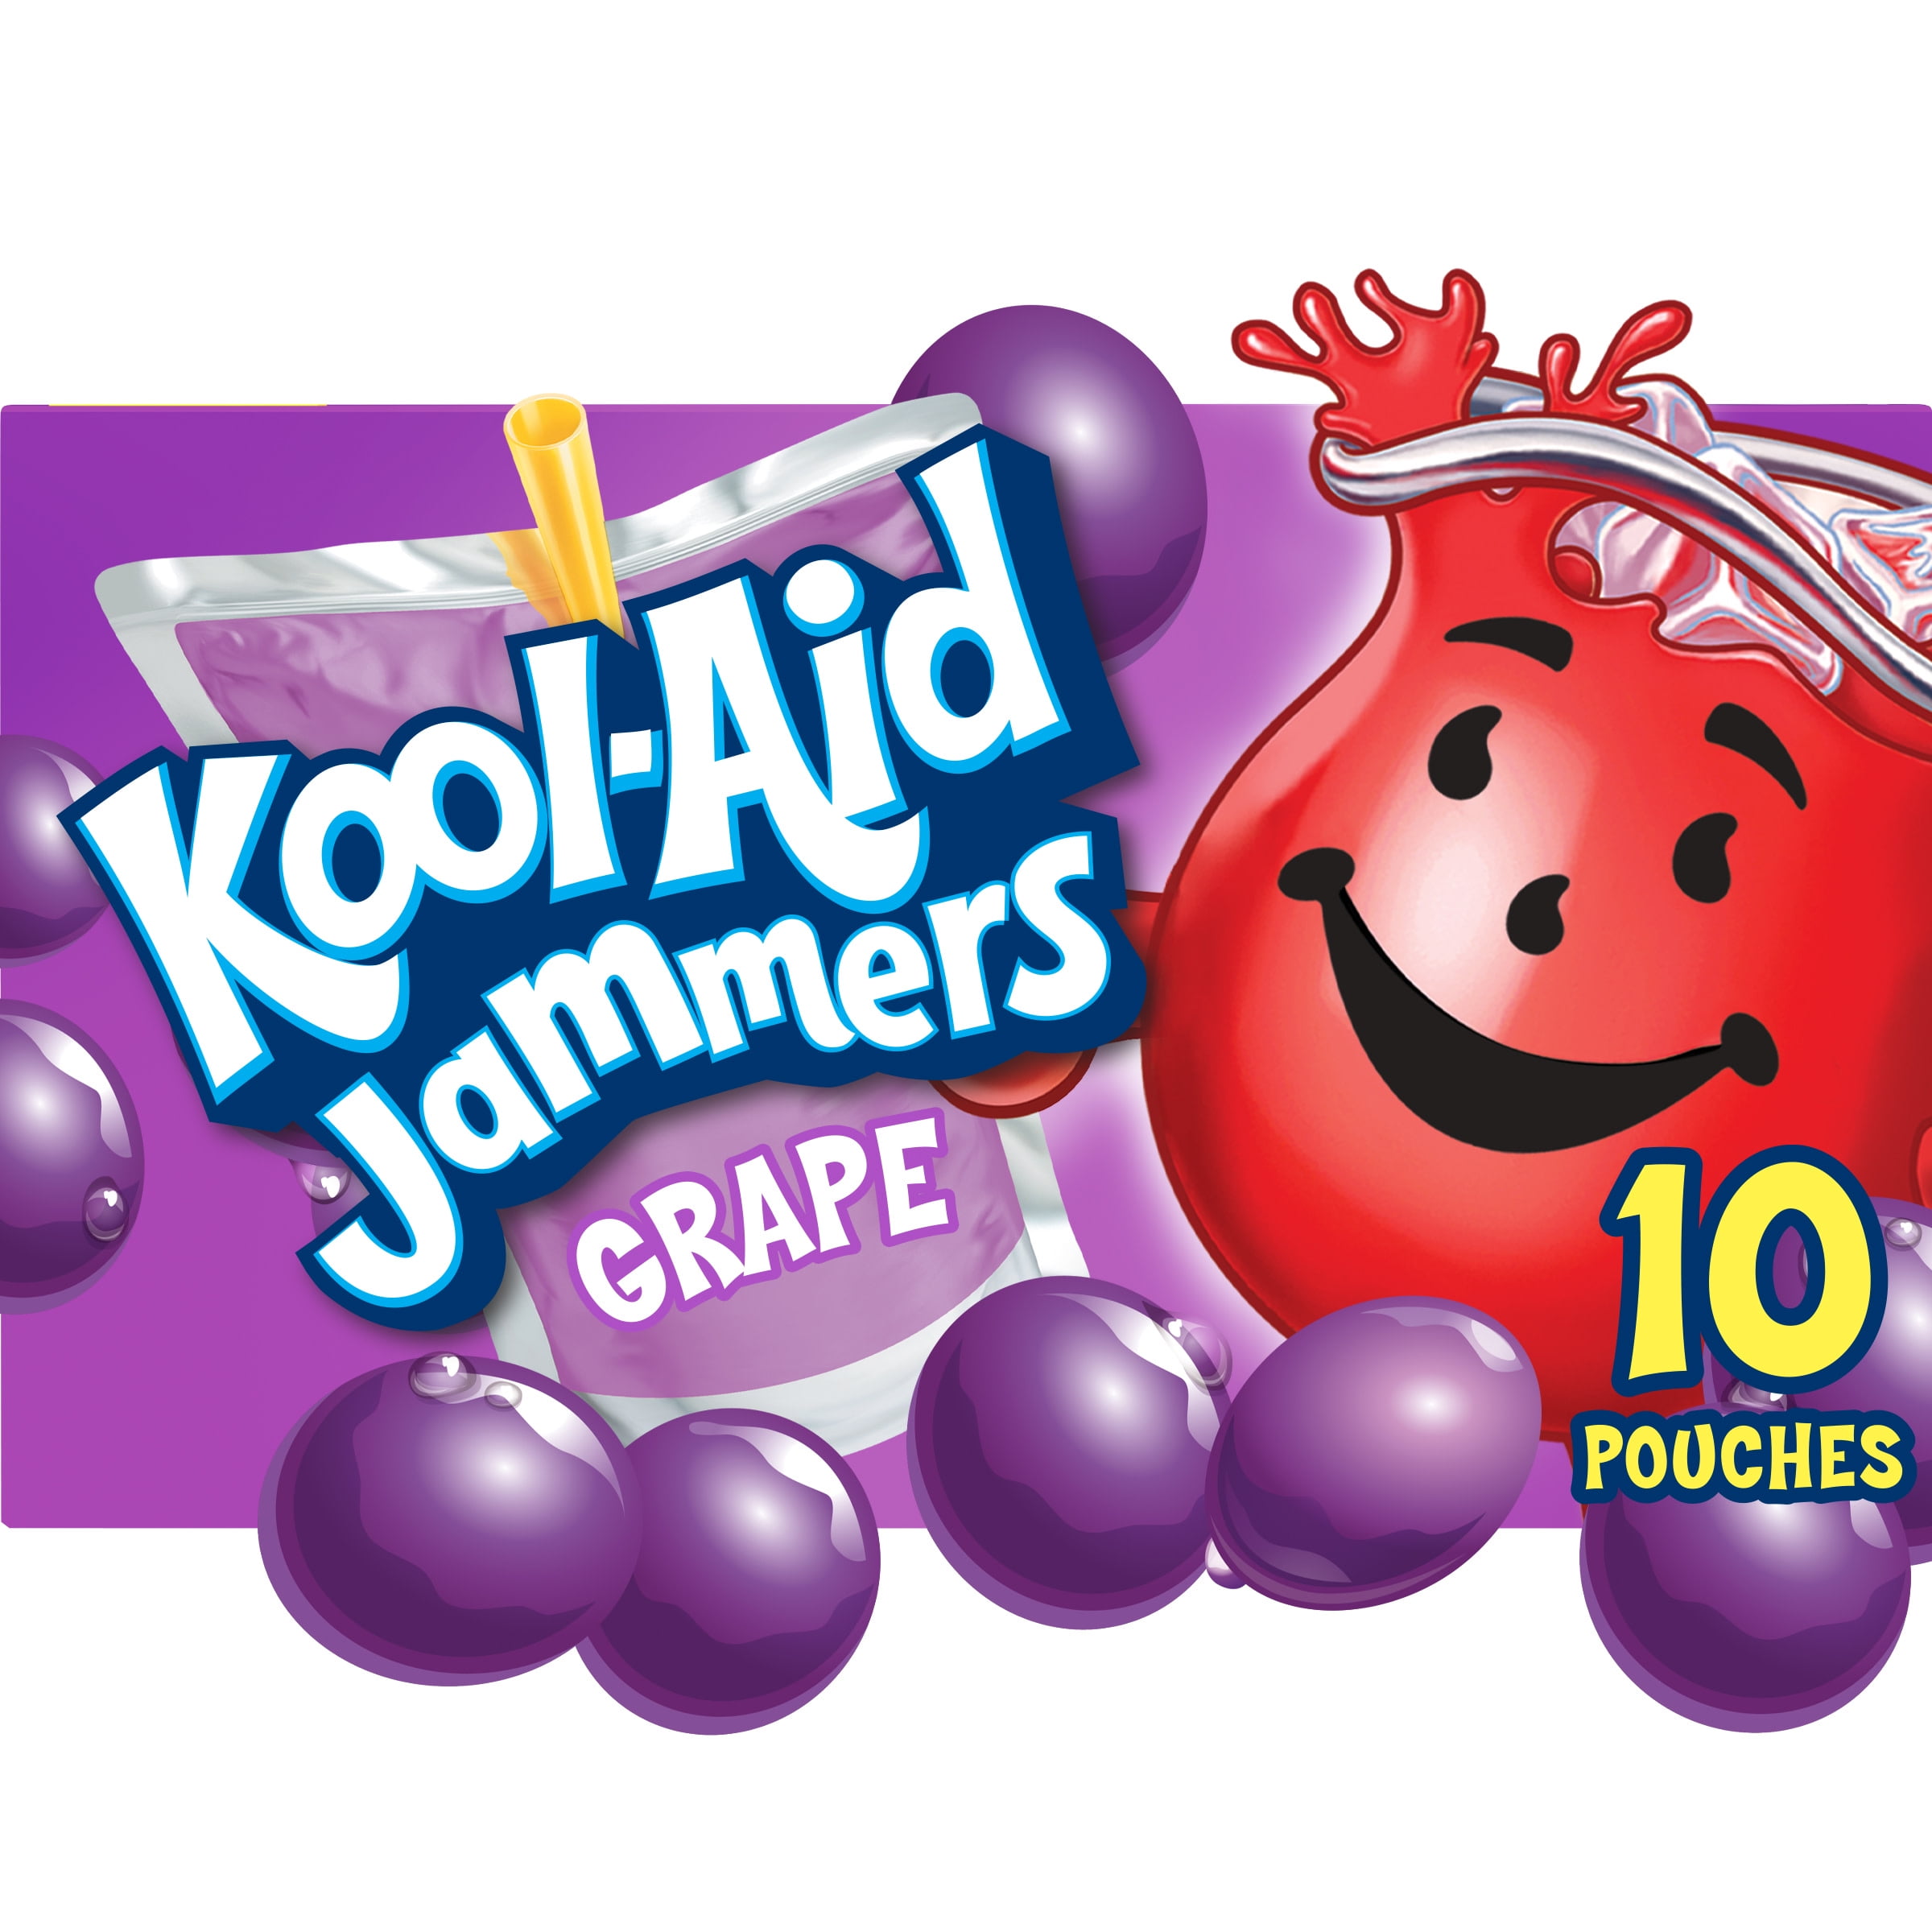 Kool Aid Jammers Grape Kids Drink 0% Juice Box Pouches, 10 Ct Box, 6 fl oz Pouches